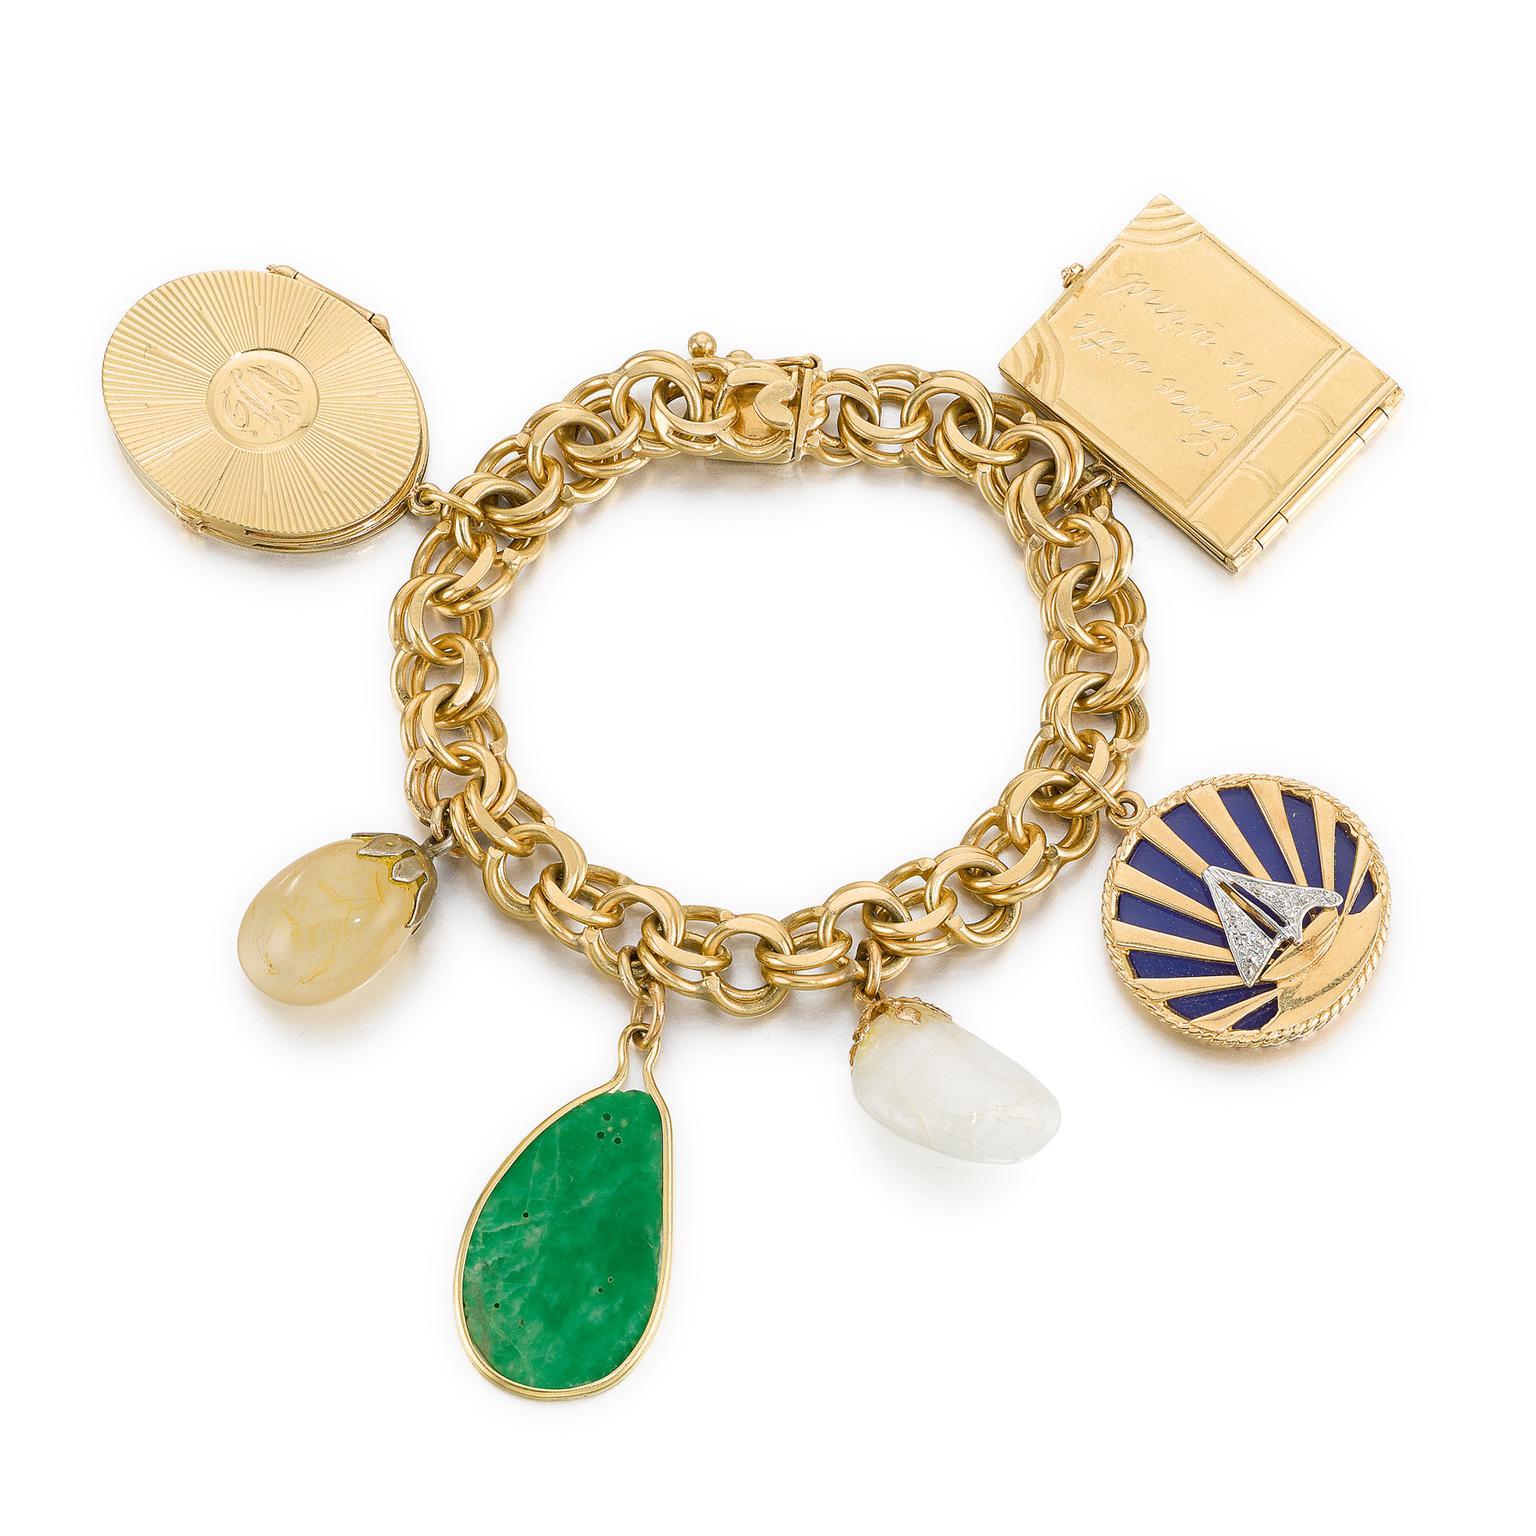 Vivien Leigh's charm bracelet